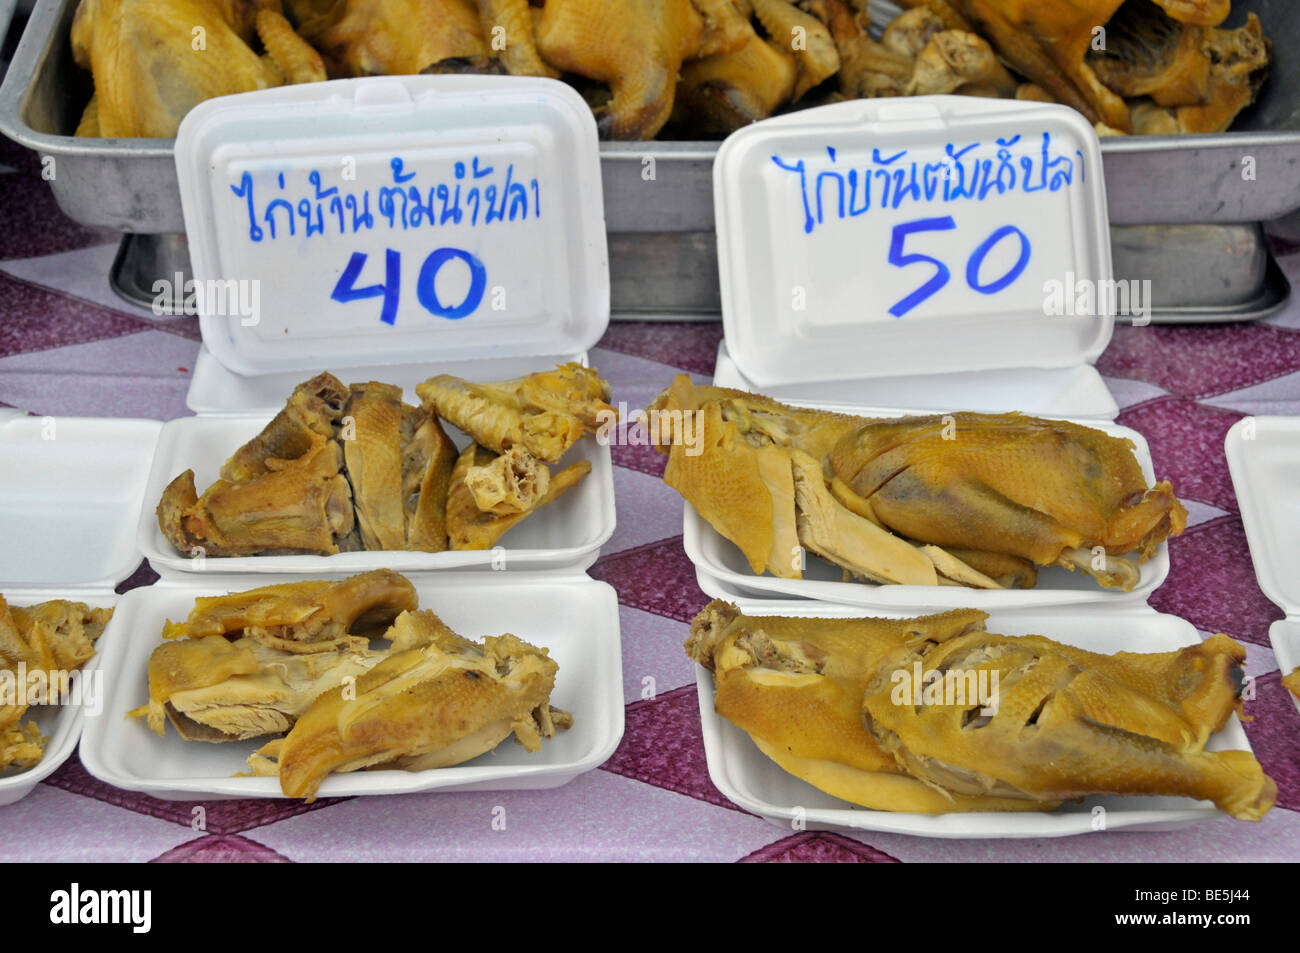 Roast duck, cookshop in Thailand, Asia Stock Photo